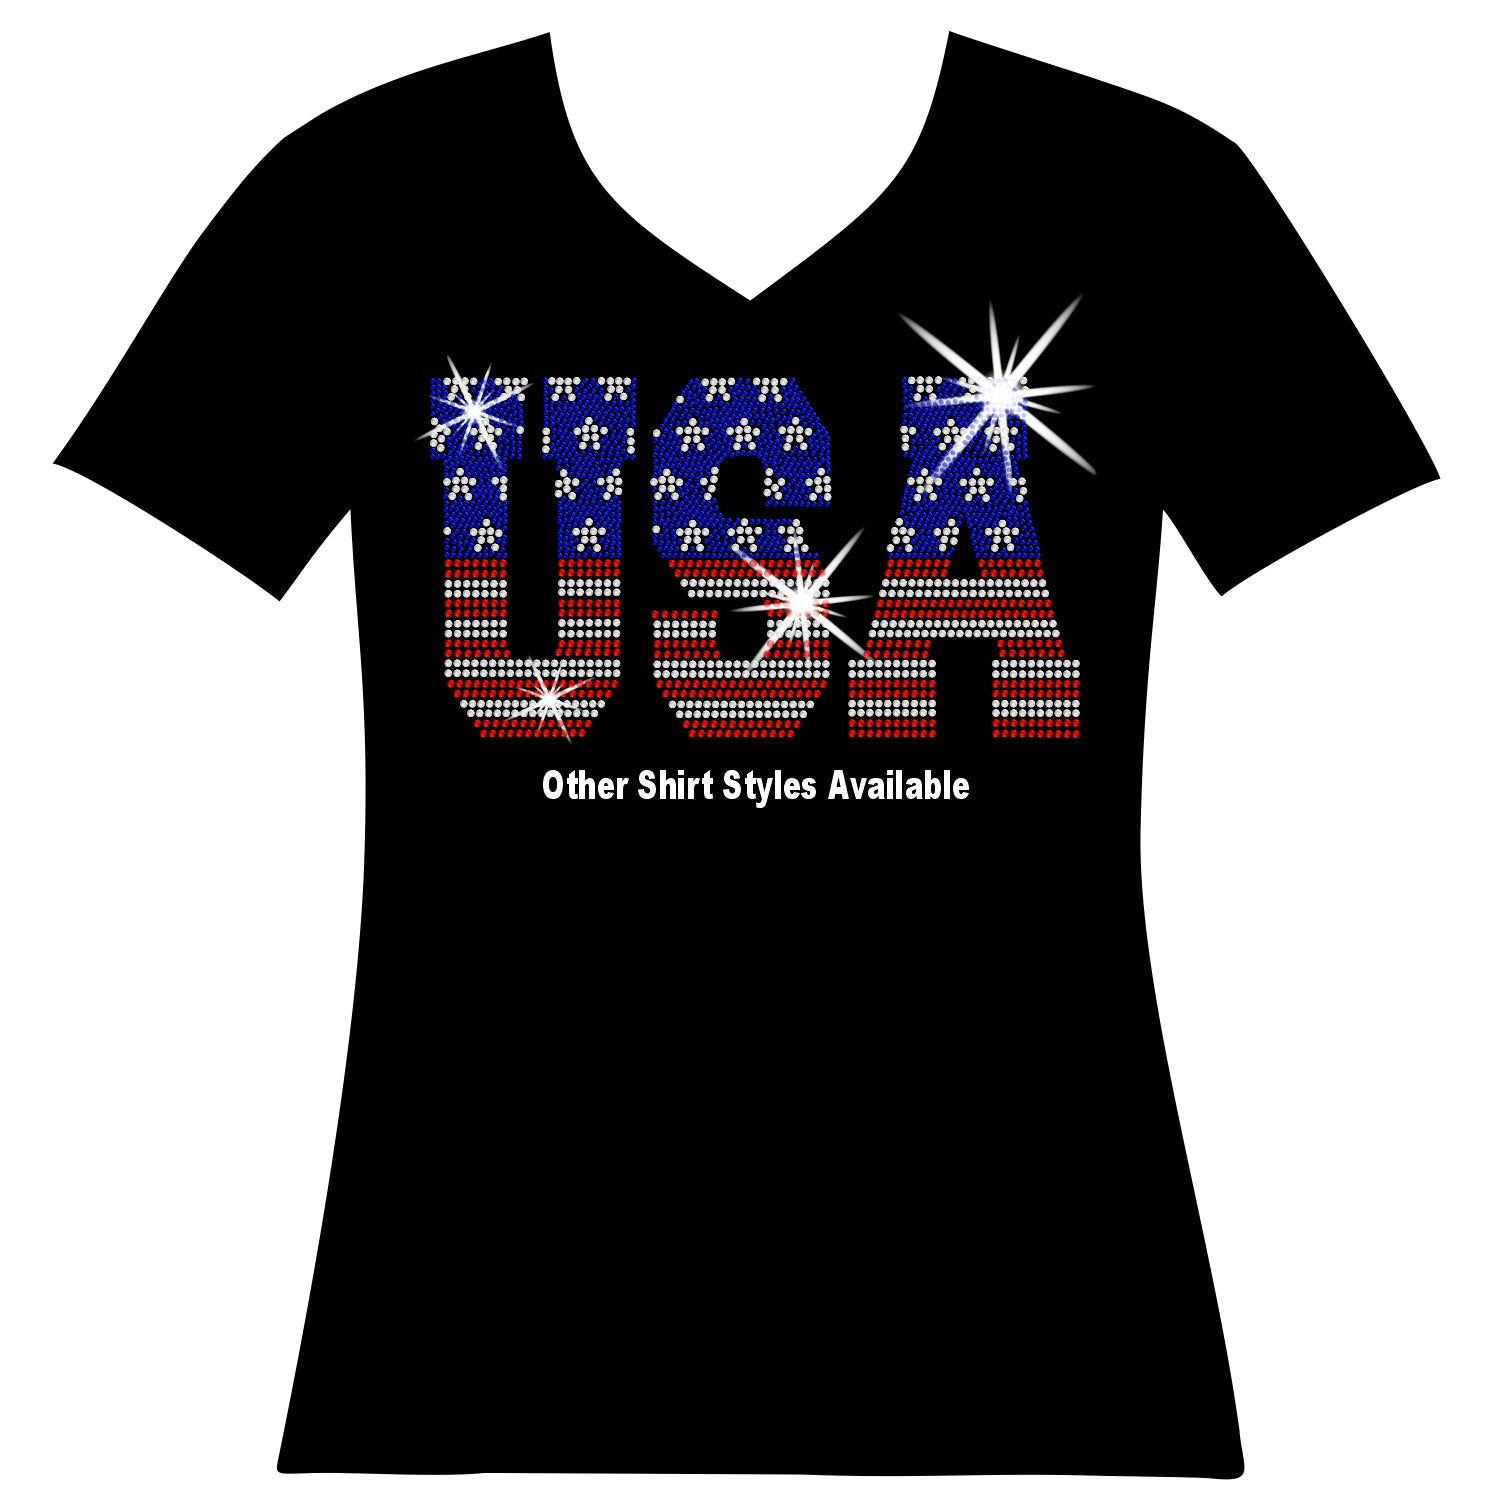 Black ladies short sleeve vneck with a rhinestone flag USA logo